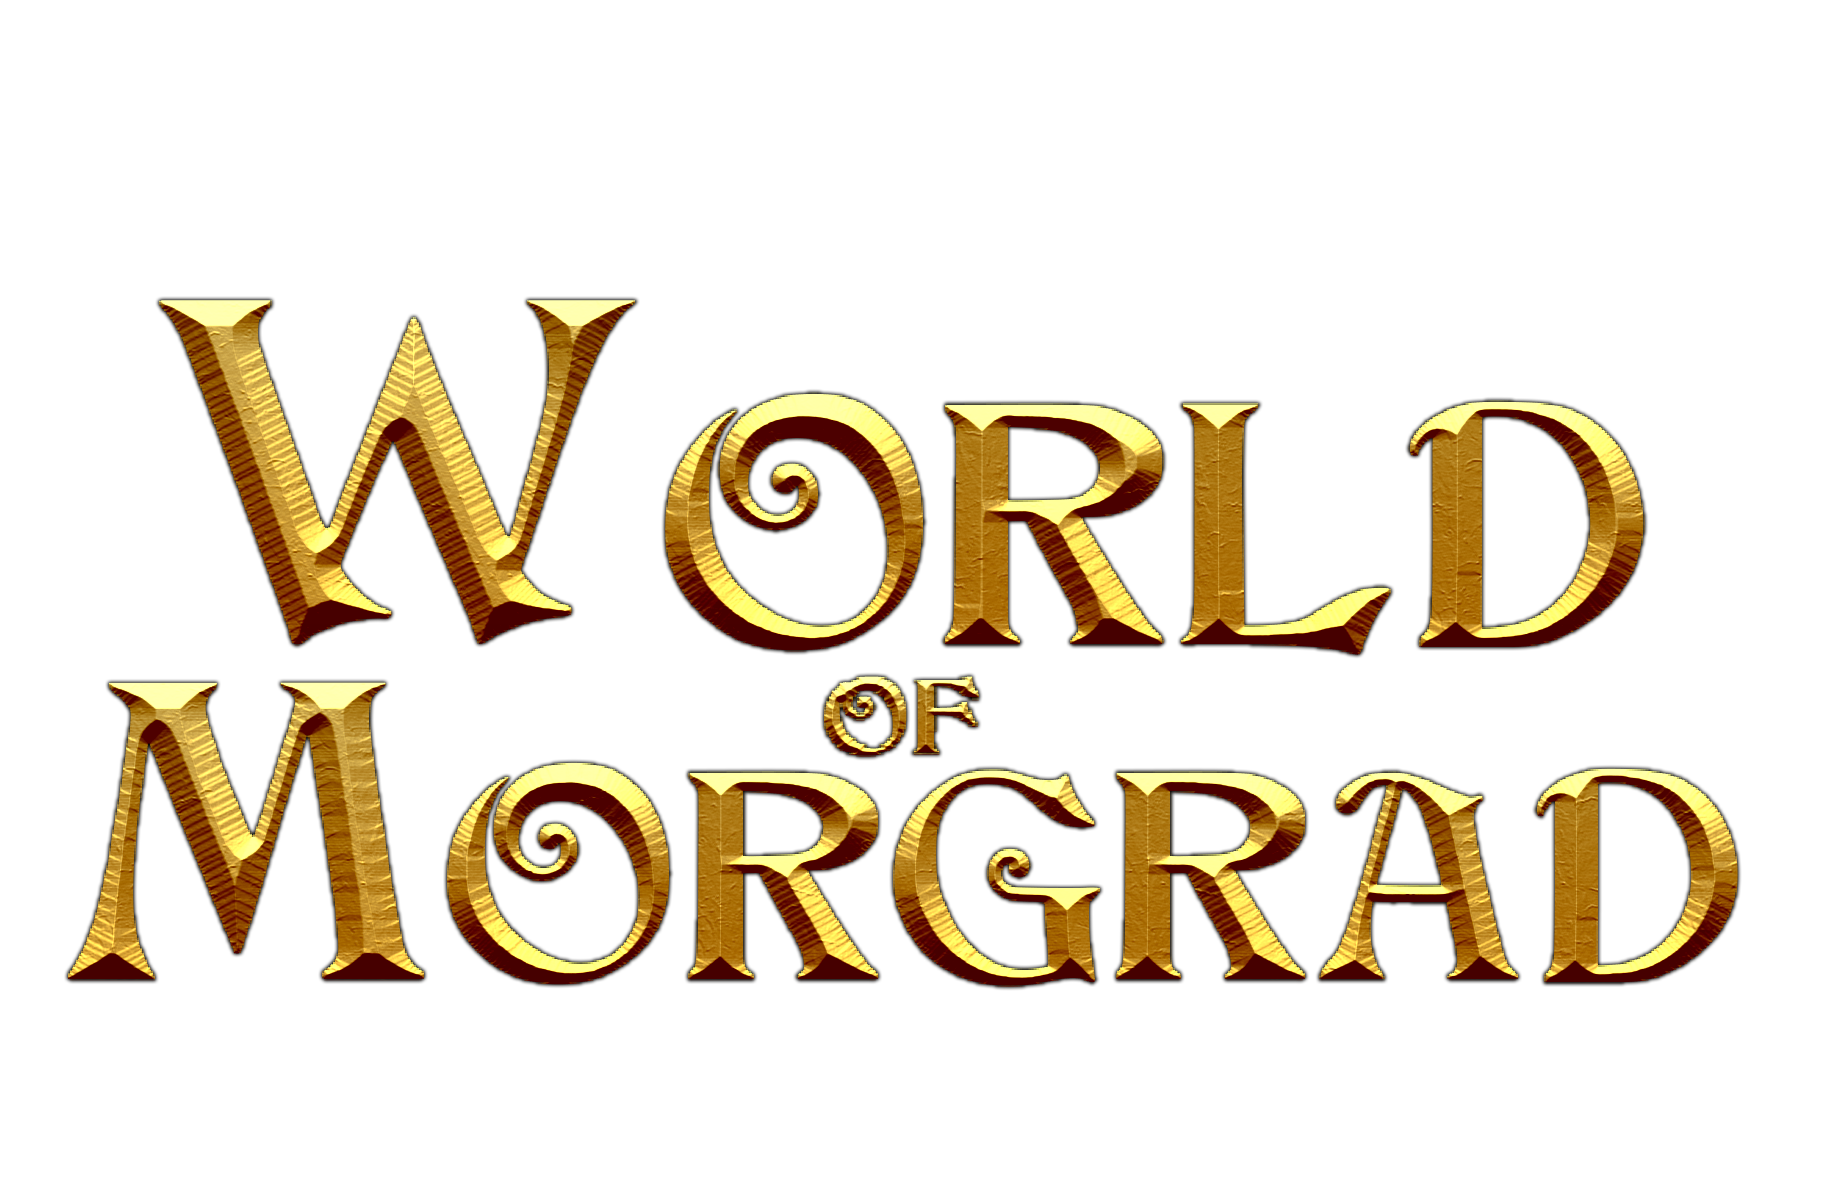 World of Morgrad